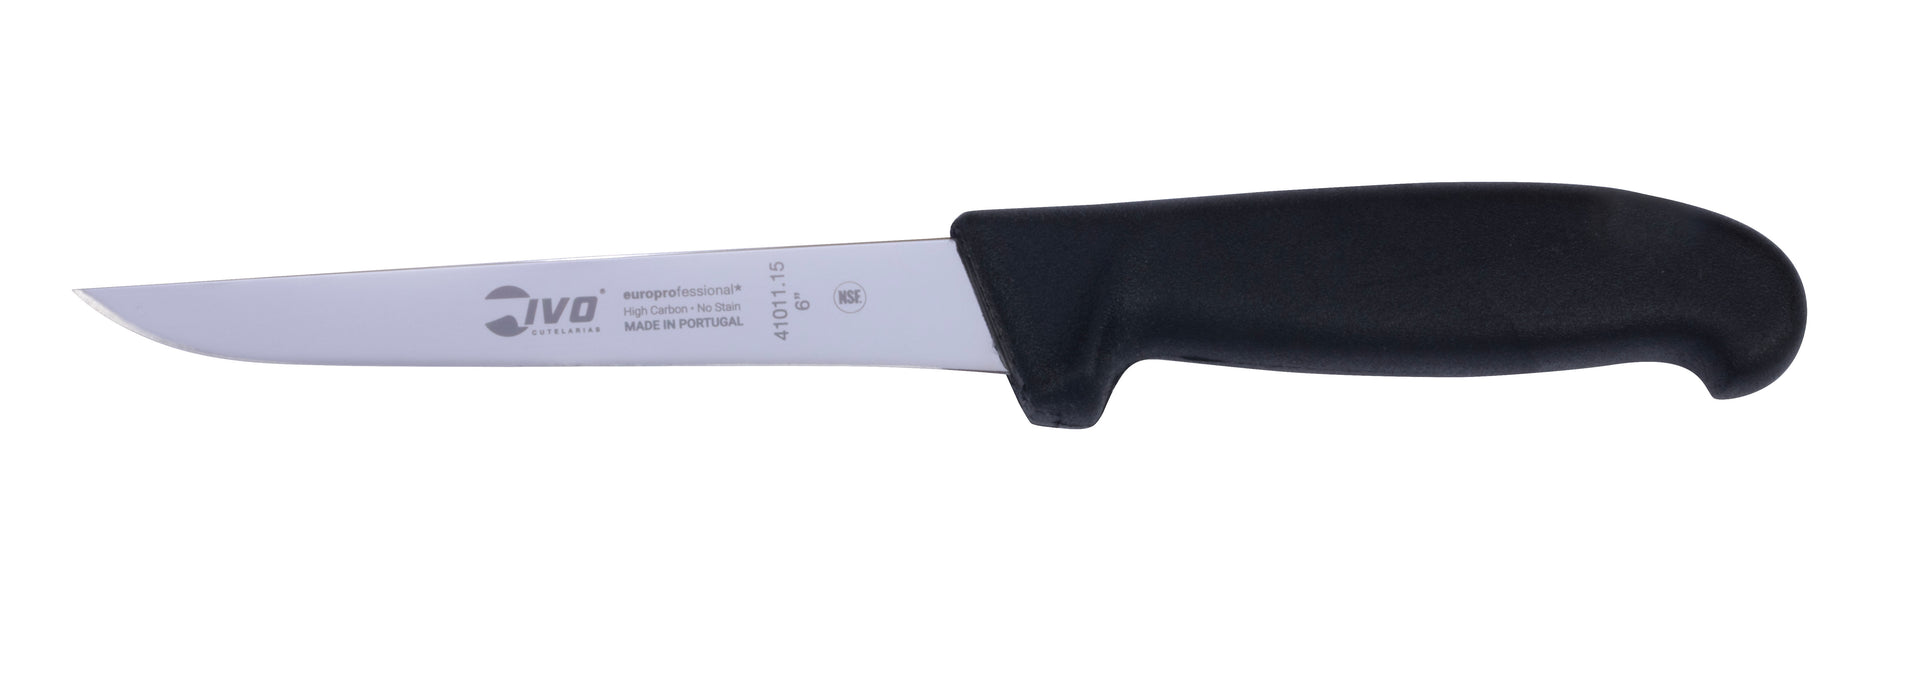 IVO EuroProfessional 6" Black Boning Knife